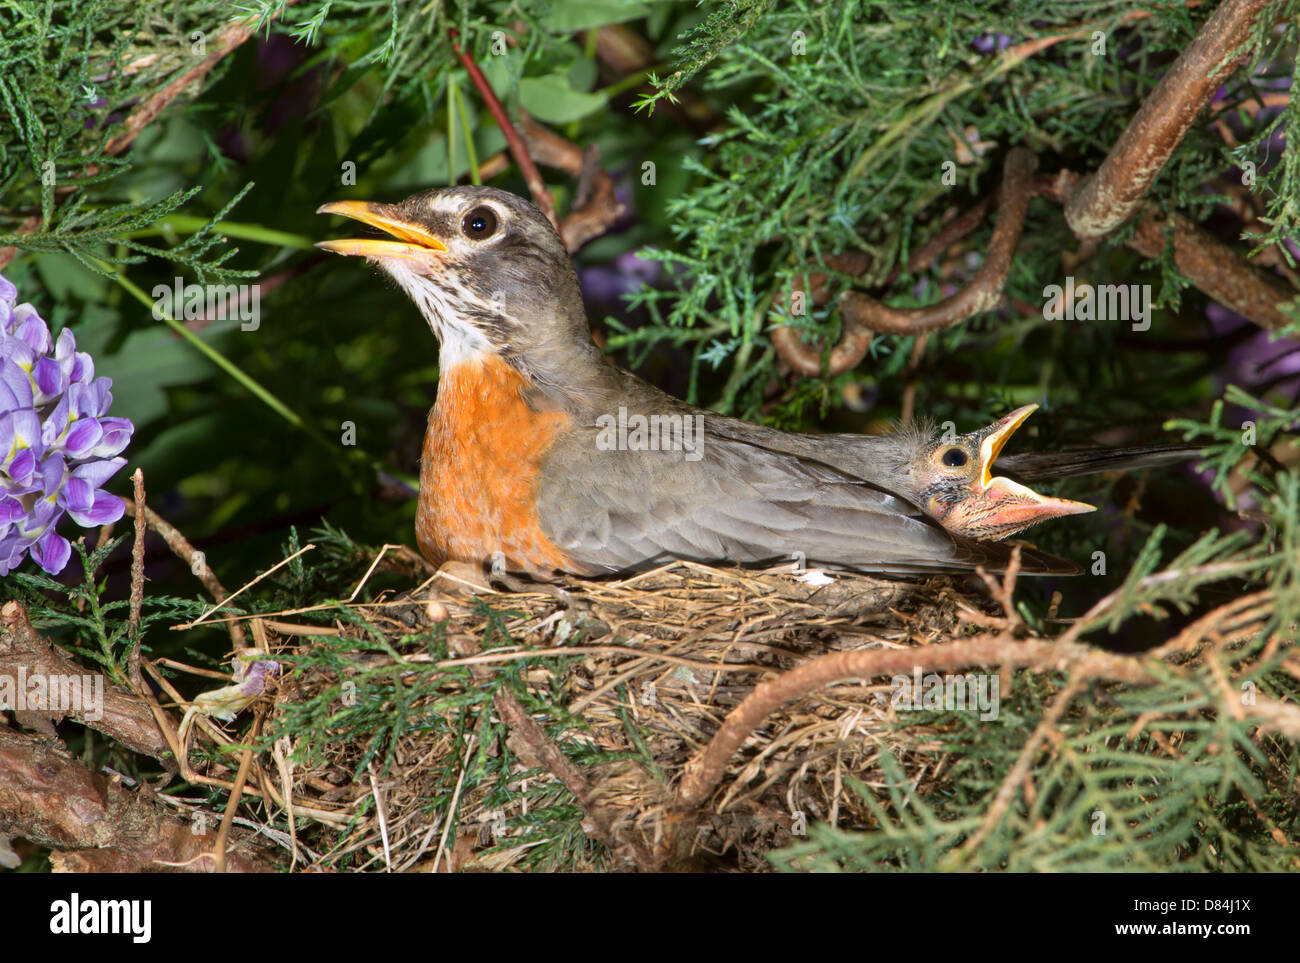 Female American robin warming nestlings in the nest. Stock Photo